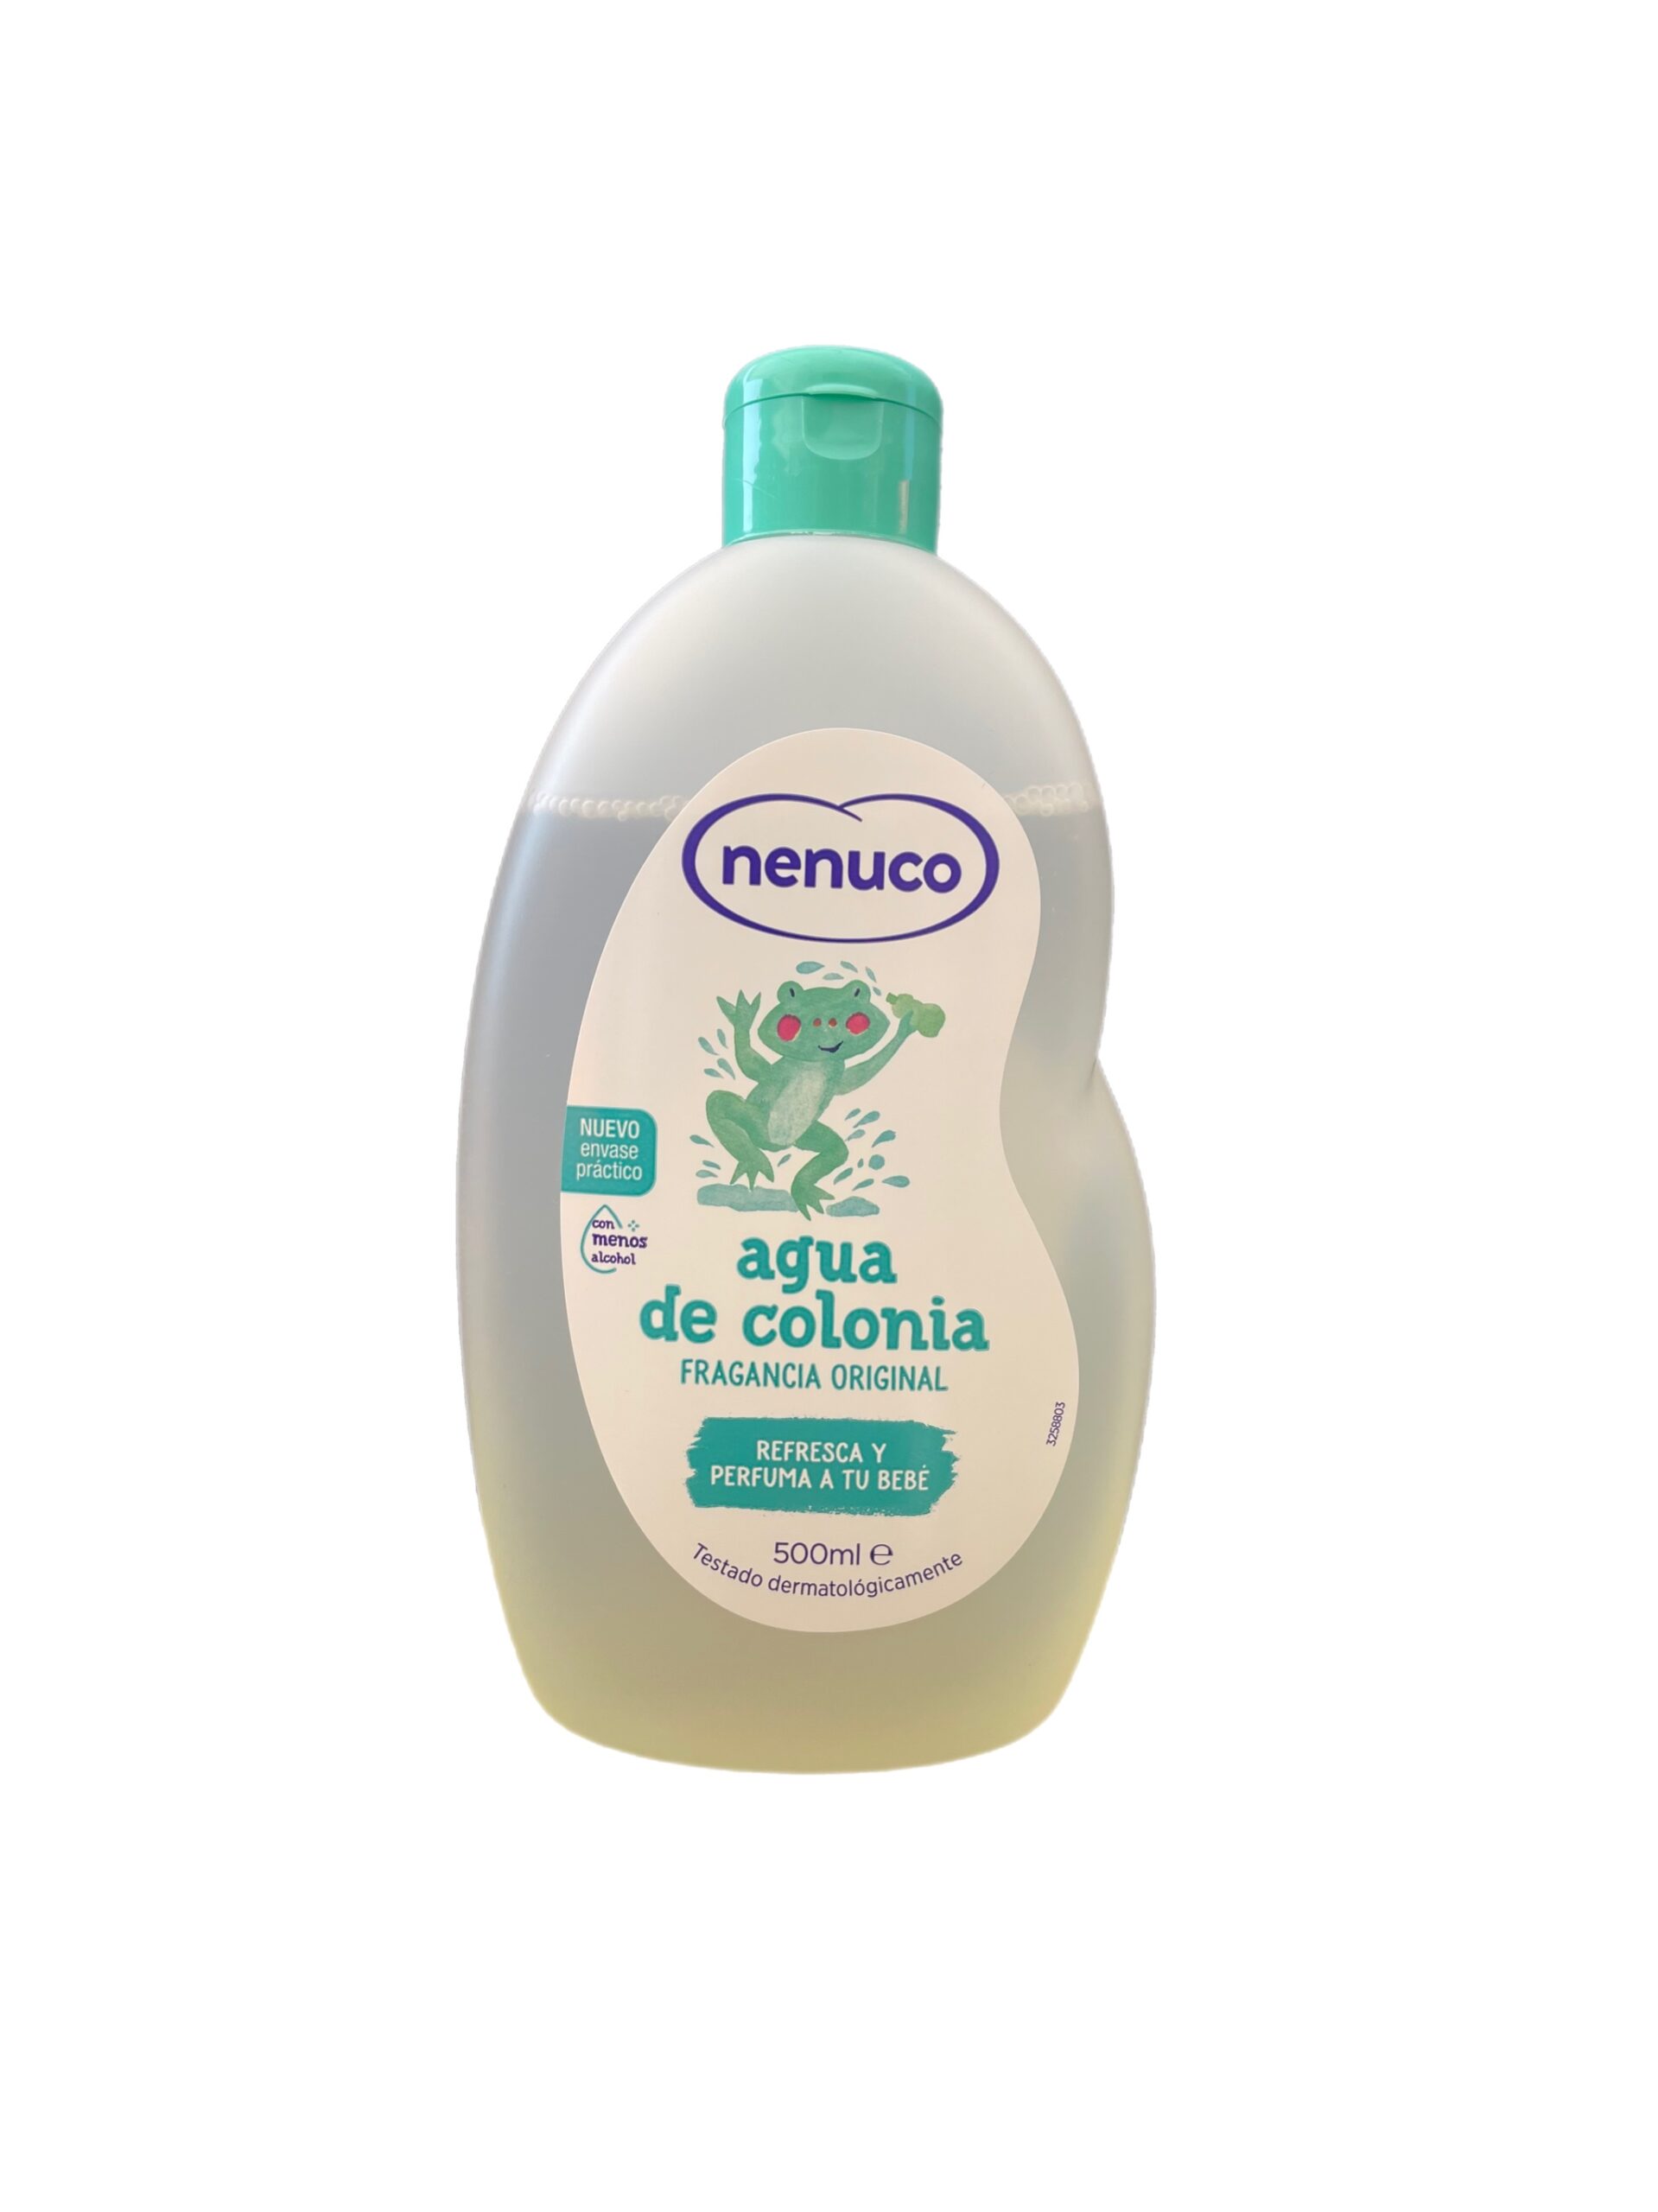 Agua de colonia infantil fragancia original frasco 500 ml · NENUCO ·  Supermercado El Corte Inglés El Corte Inglés